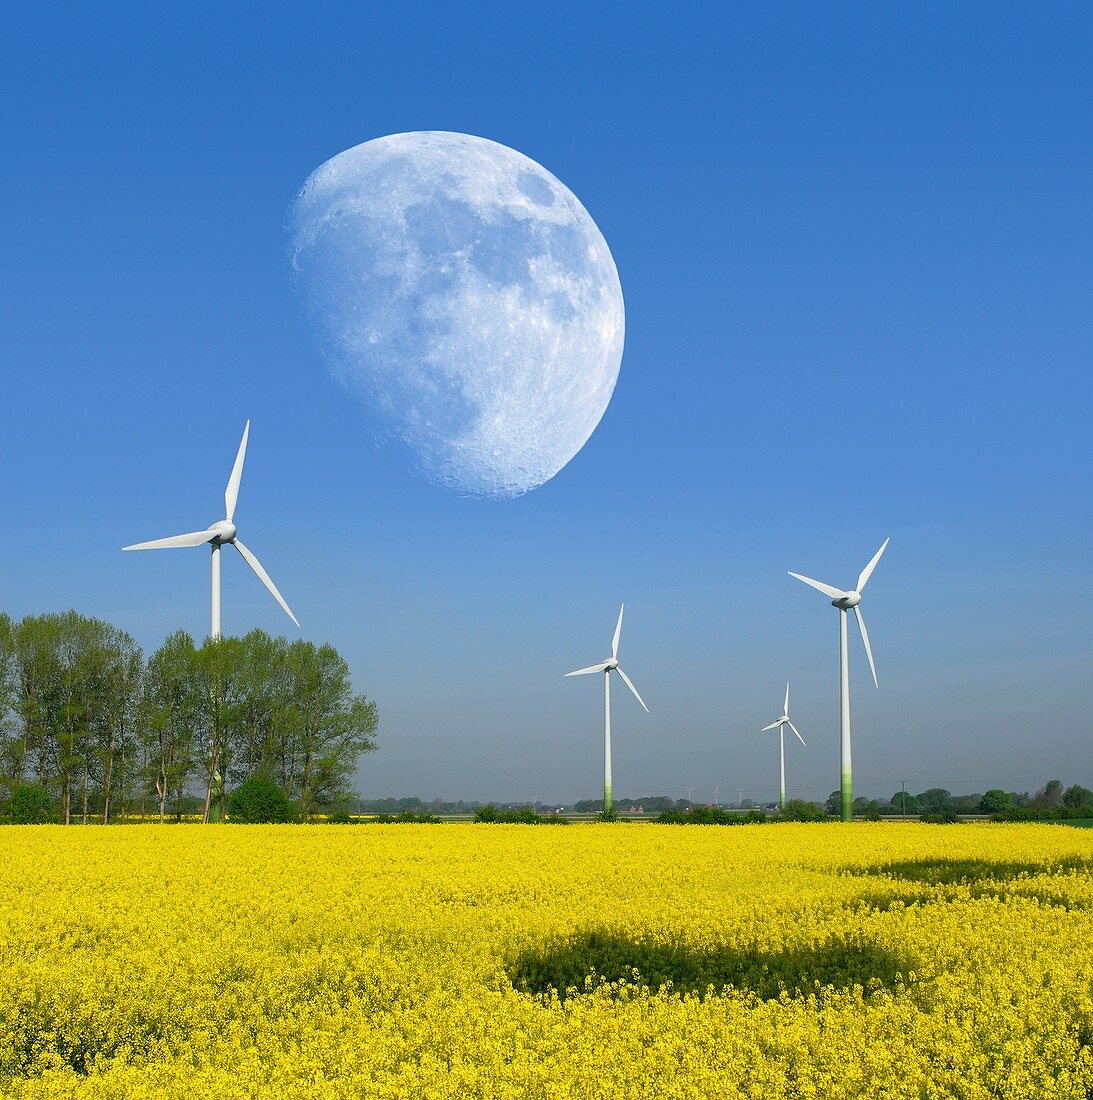 Moon over wind turbines in a field